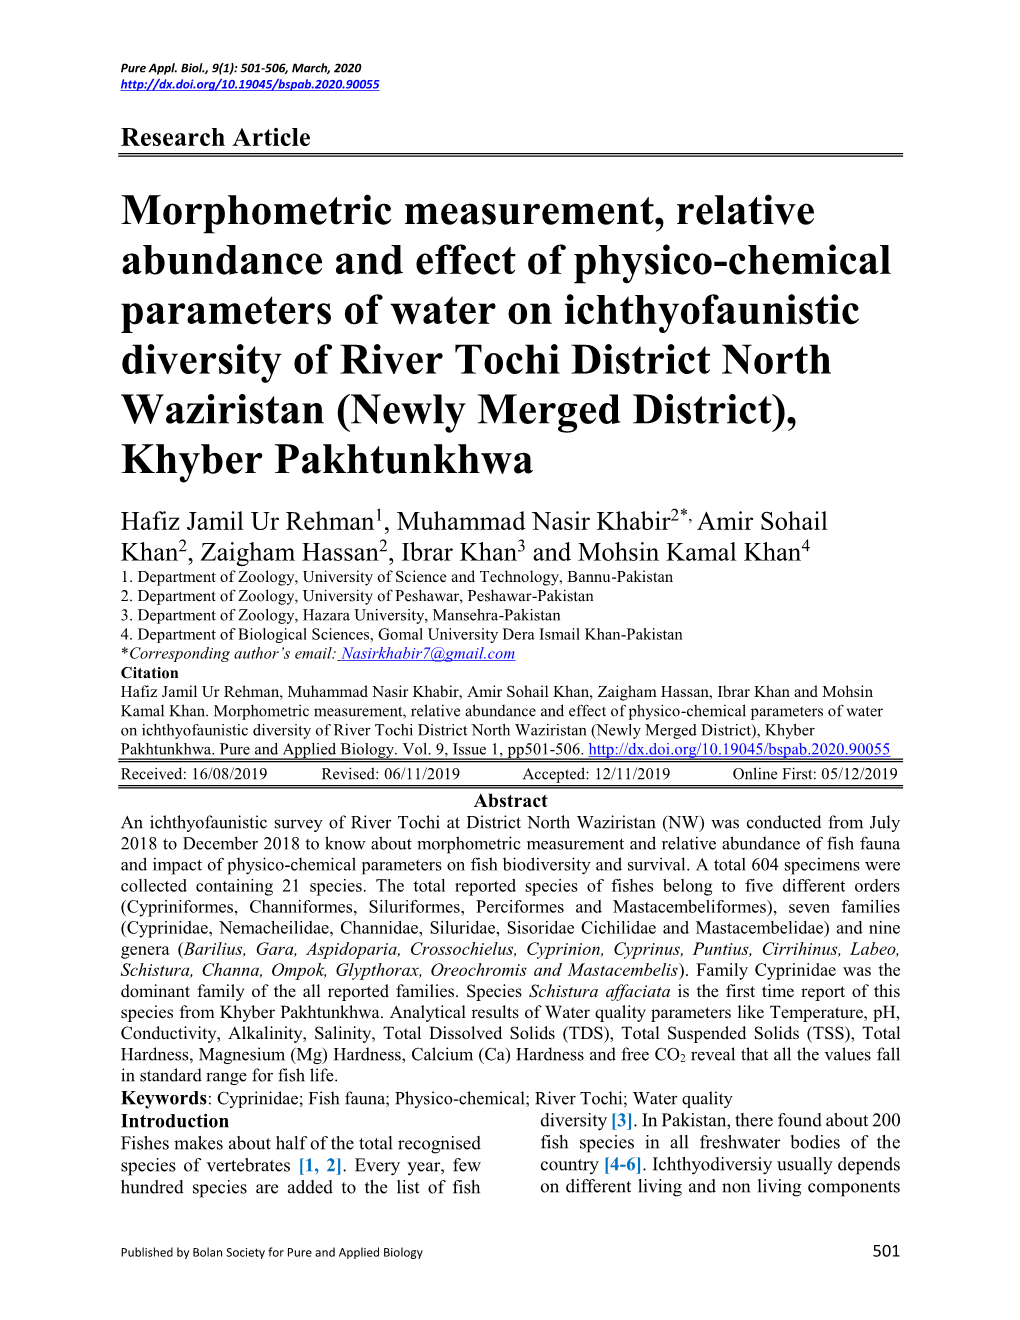 Morphometric Measurement, Relative Abundance and Effect of Physico